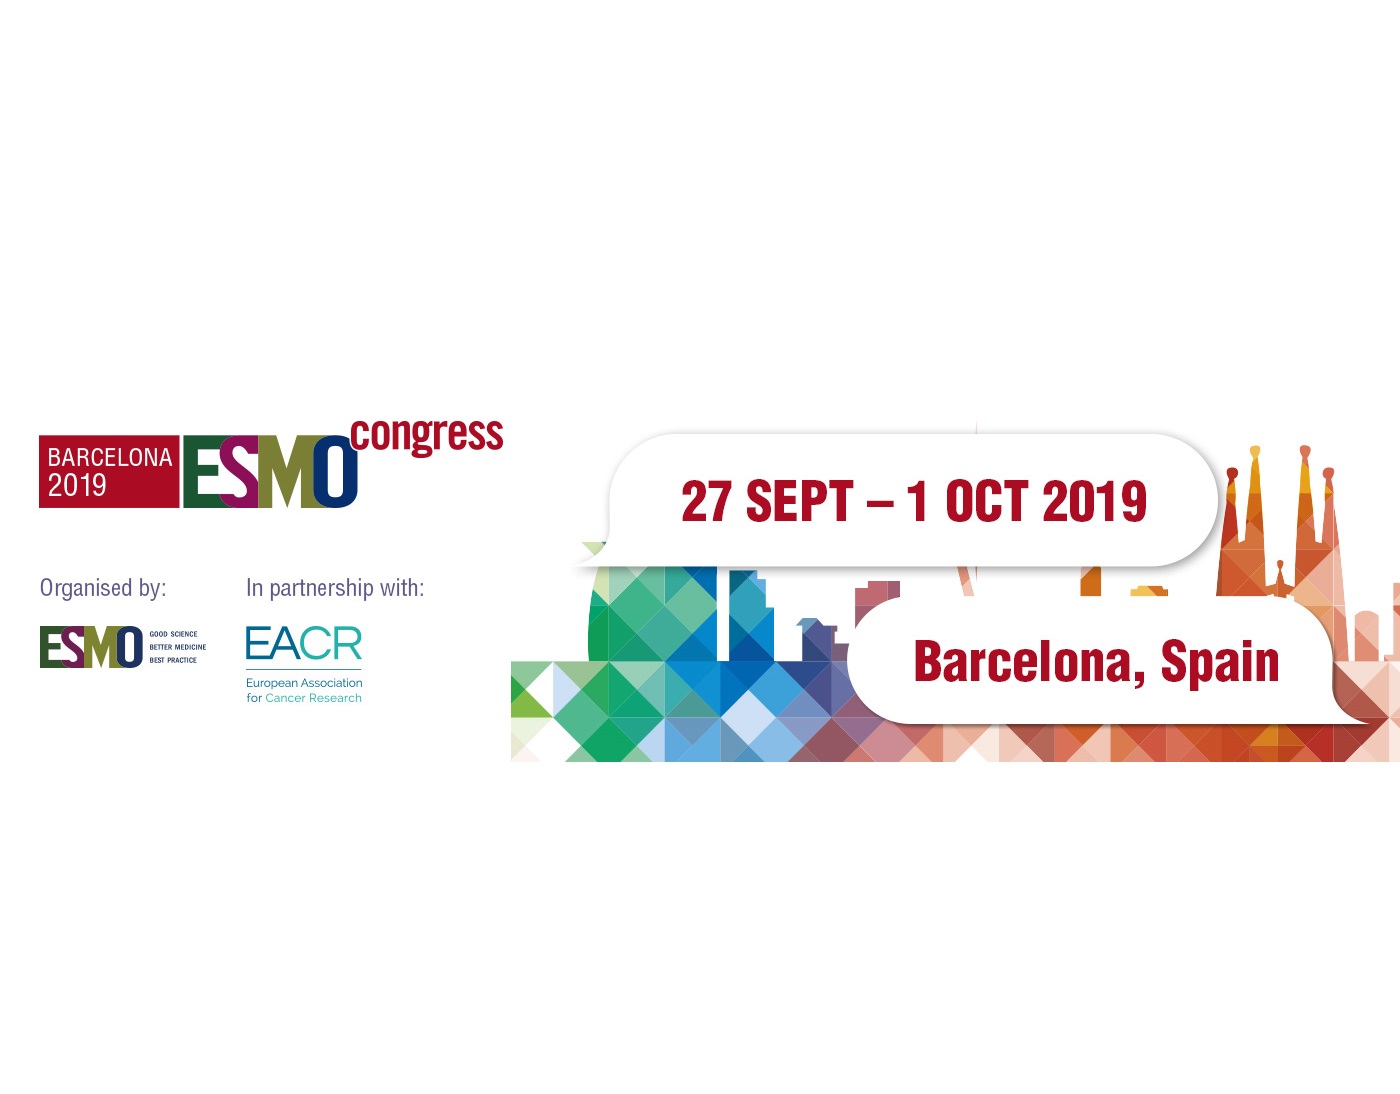 Visit AmoyDx at ESMO Congress 2019 in Barcelona